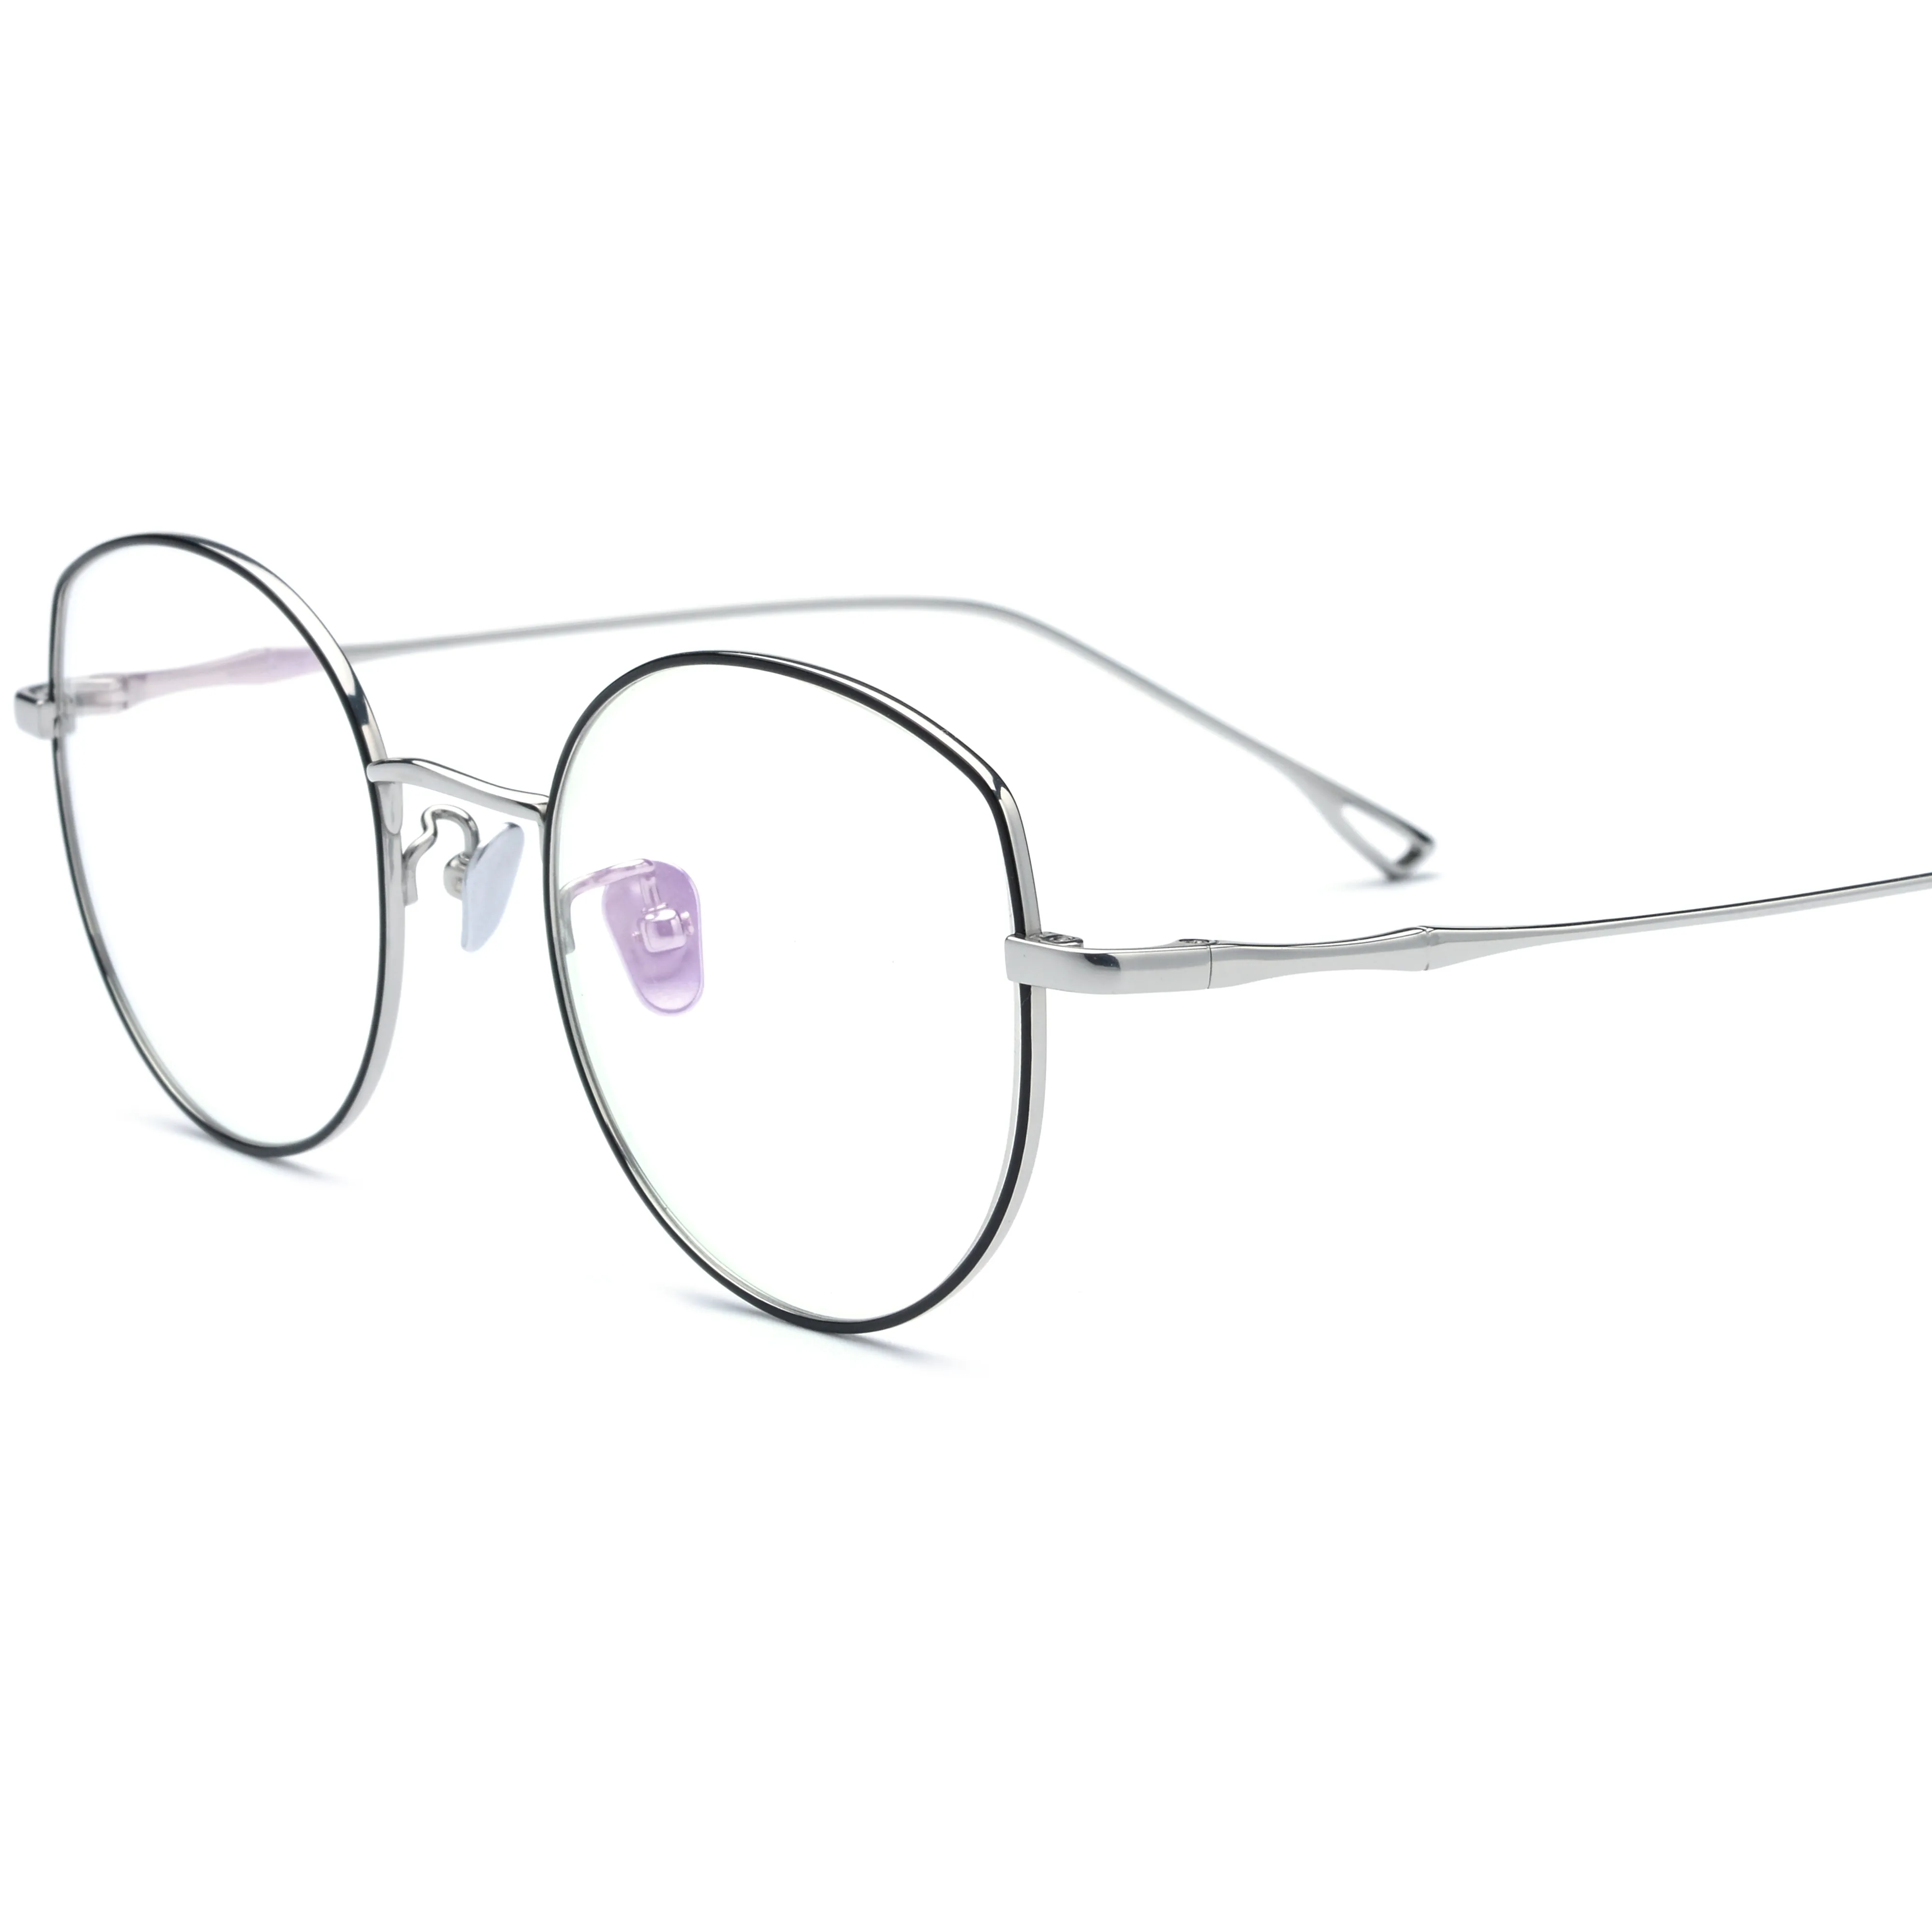 COES Hot Selling Trial Titanium Frames Eyewear Optical Glasses Frame